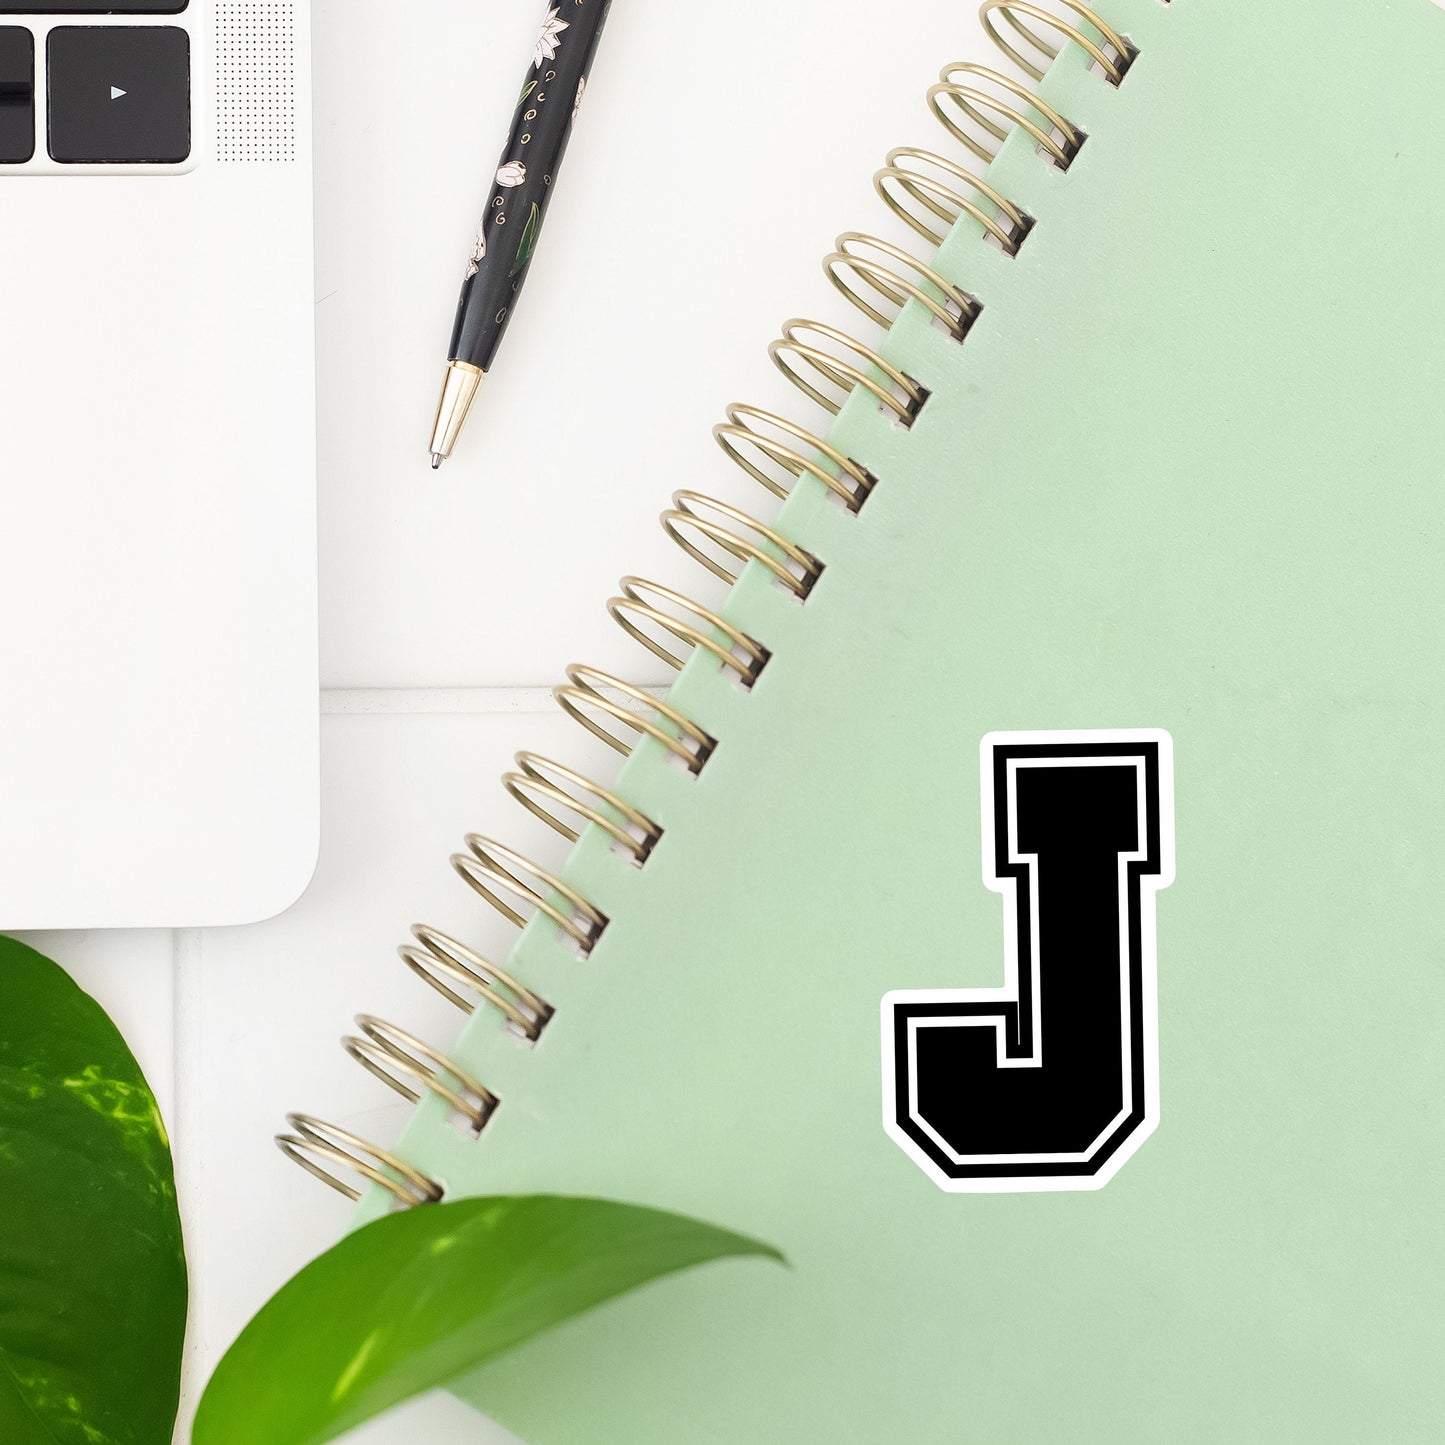 J Letter Sticker- Tumbler sticker, decal, laptop sticker, water bottle sticker, letter sticker, sticker, stickers, waterproof, initials, J